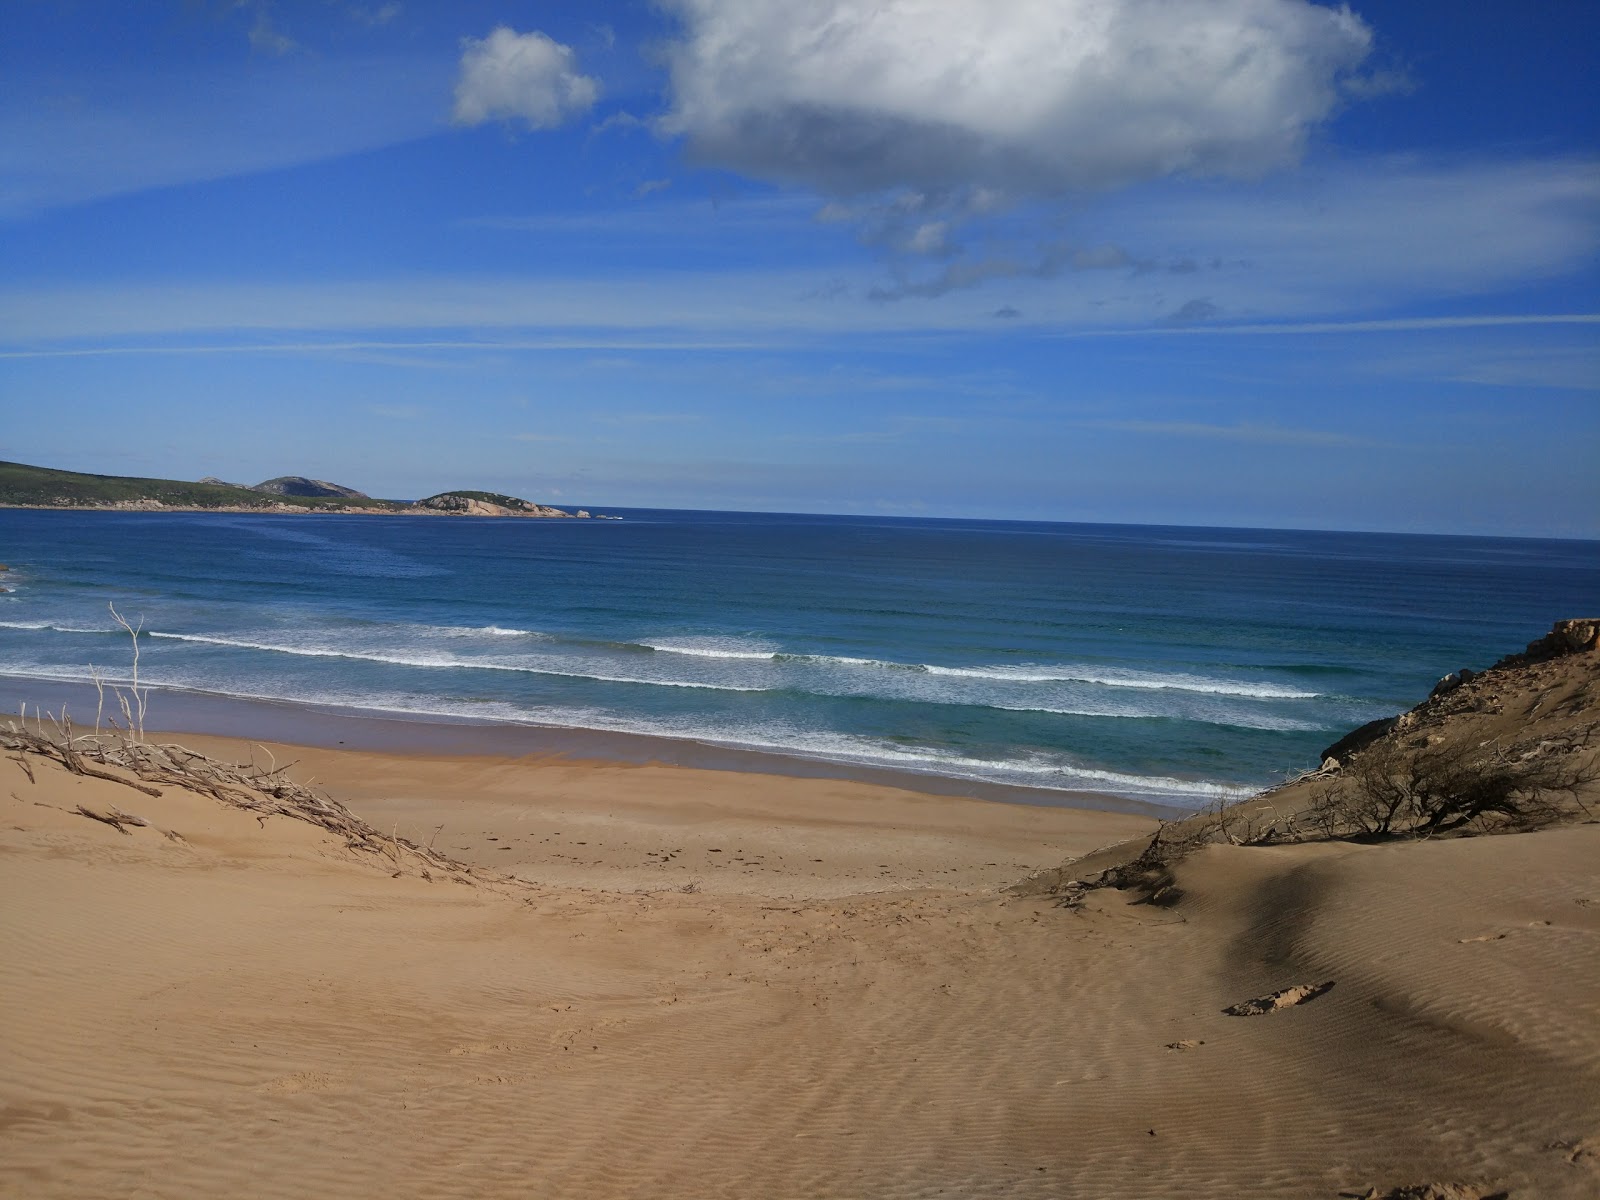 Foto di Darby Beach ubicato in zona naturale